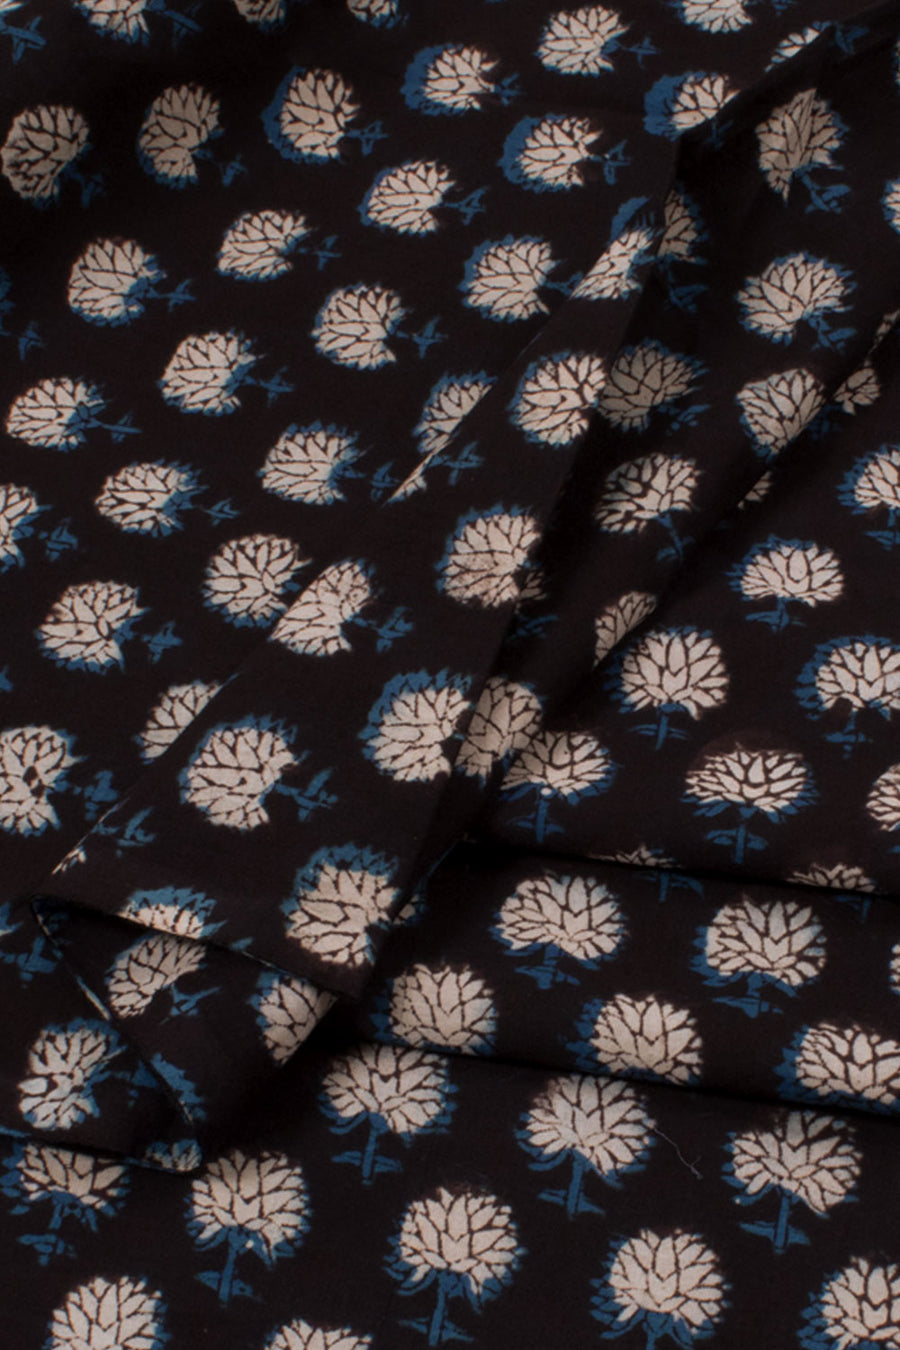 Dabu Printed 2.5 m Cotton Kurta Material with Floral Motifs